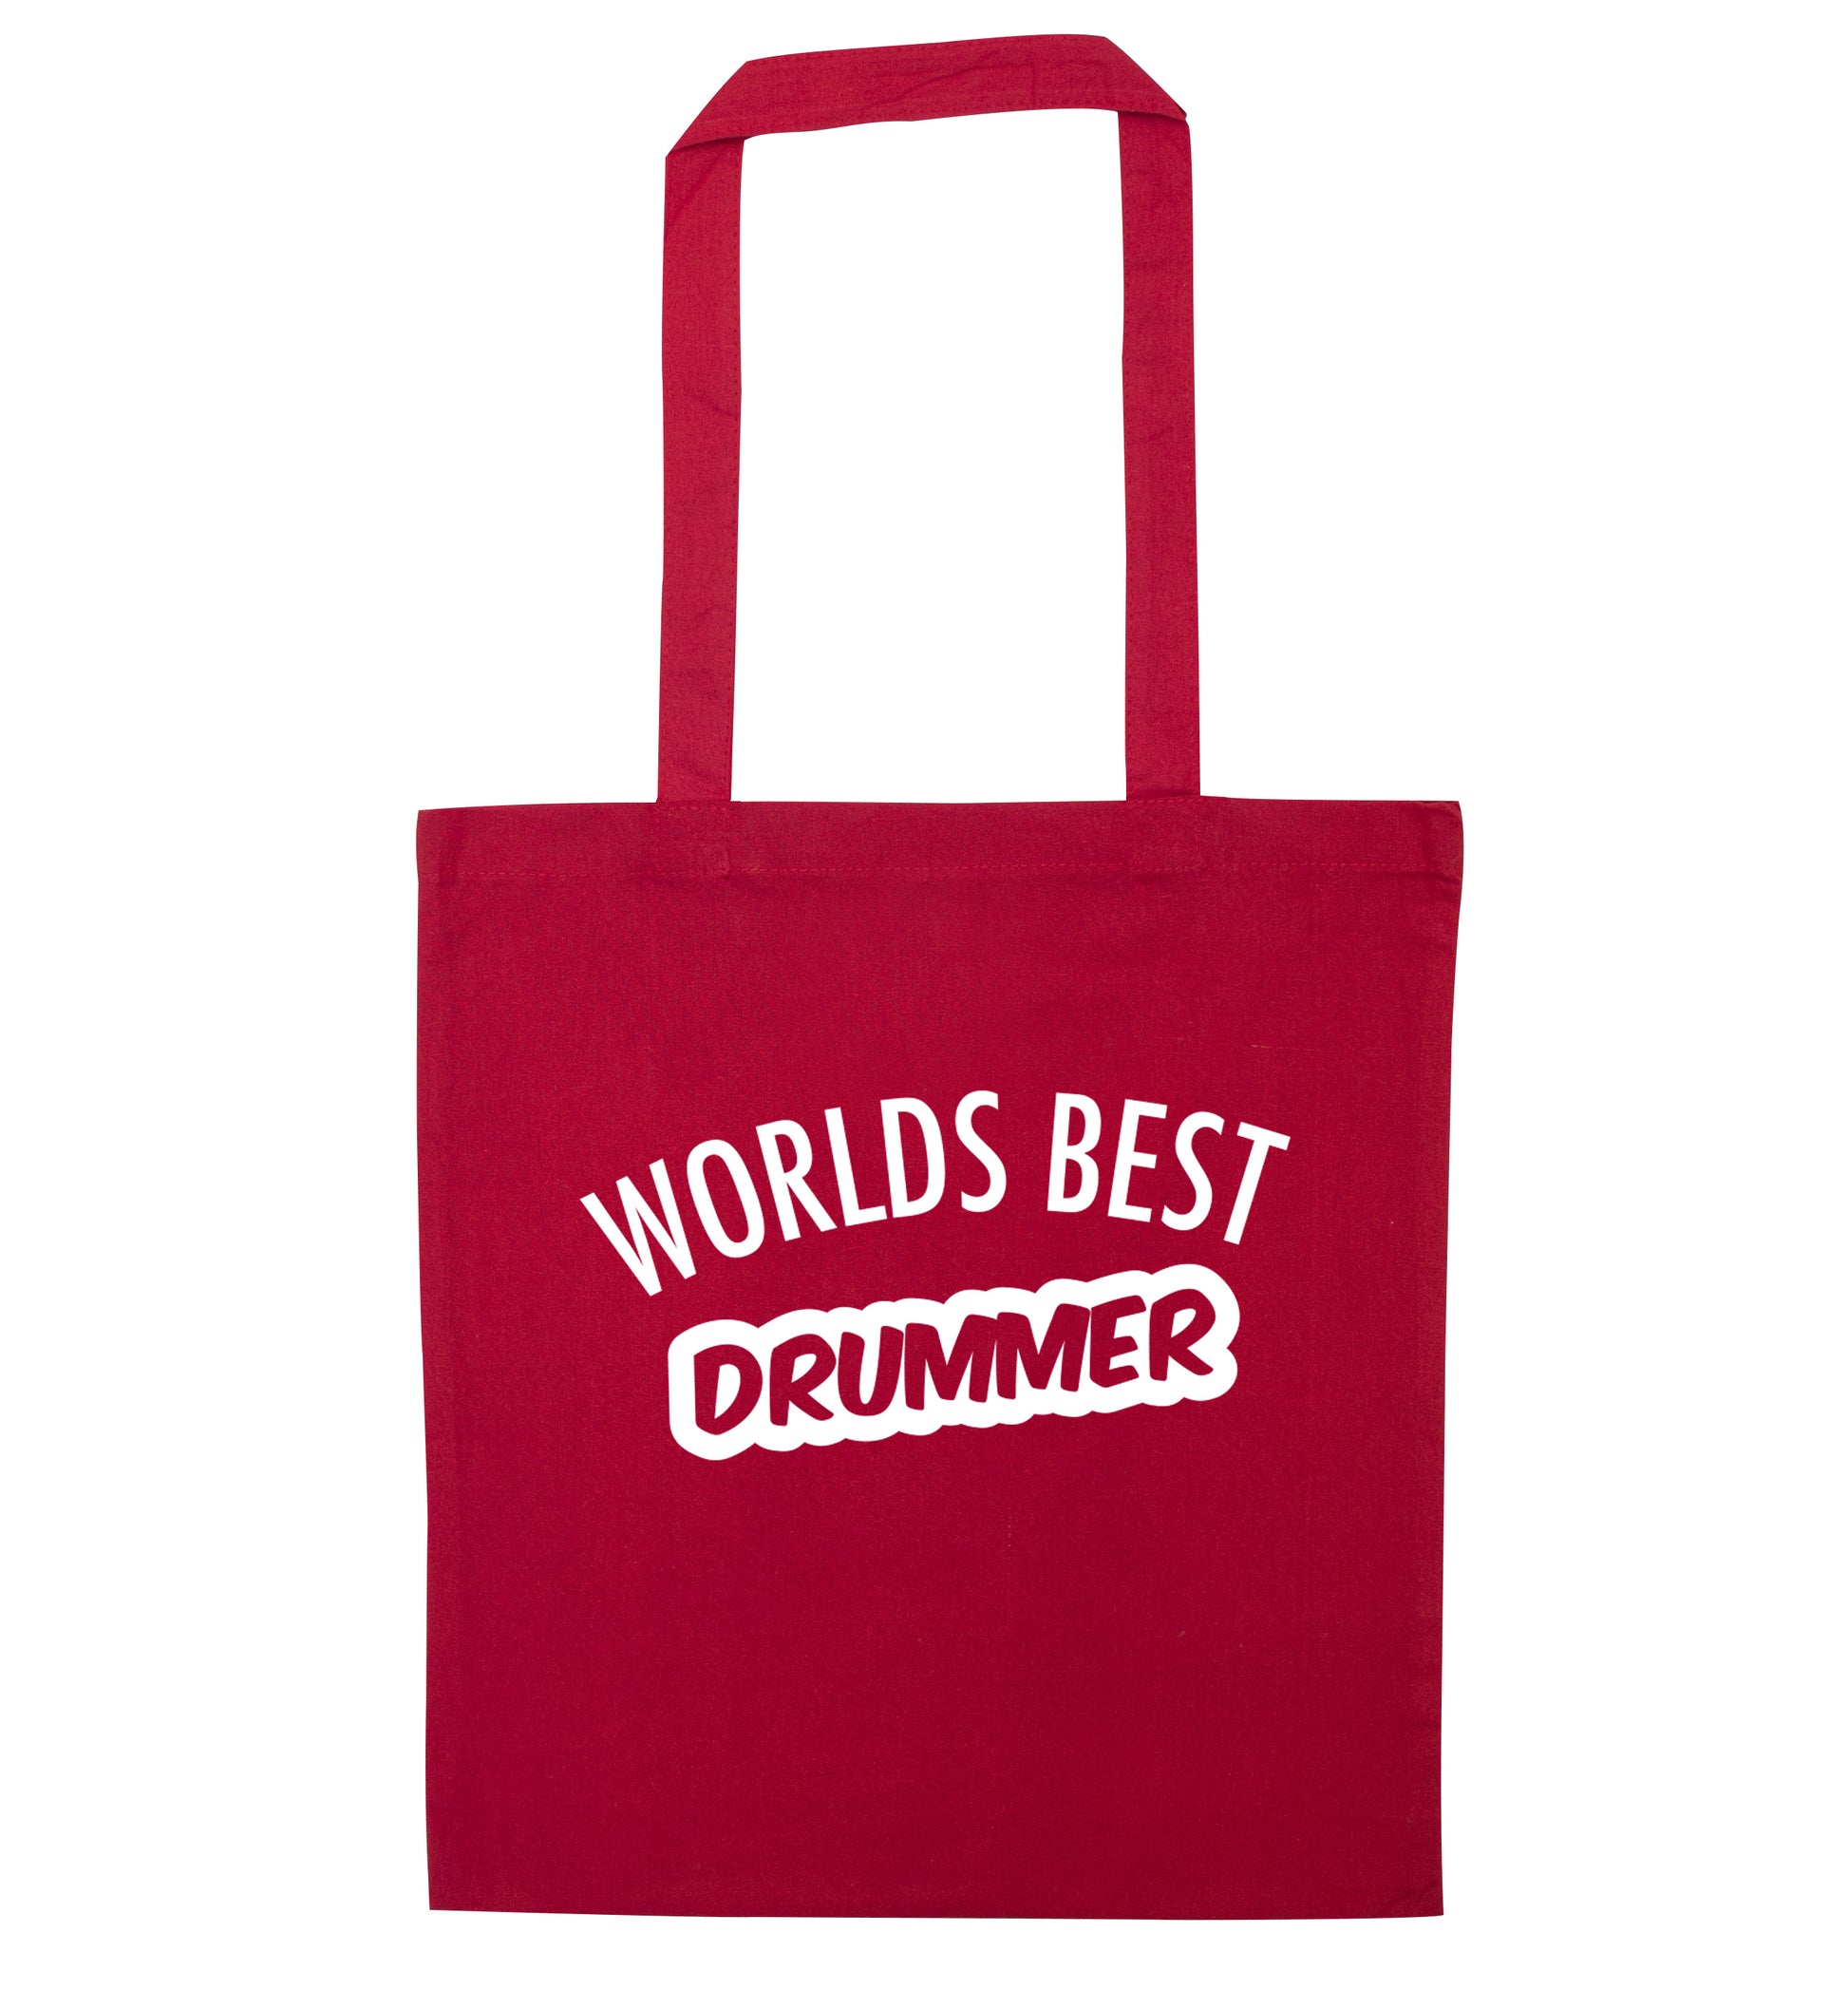 Worlds best drummer red tote bag